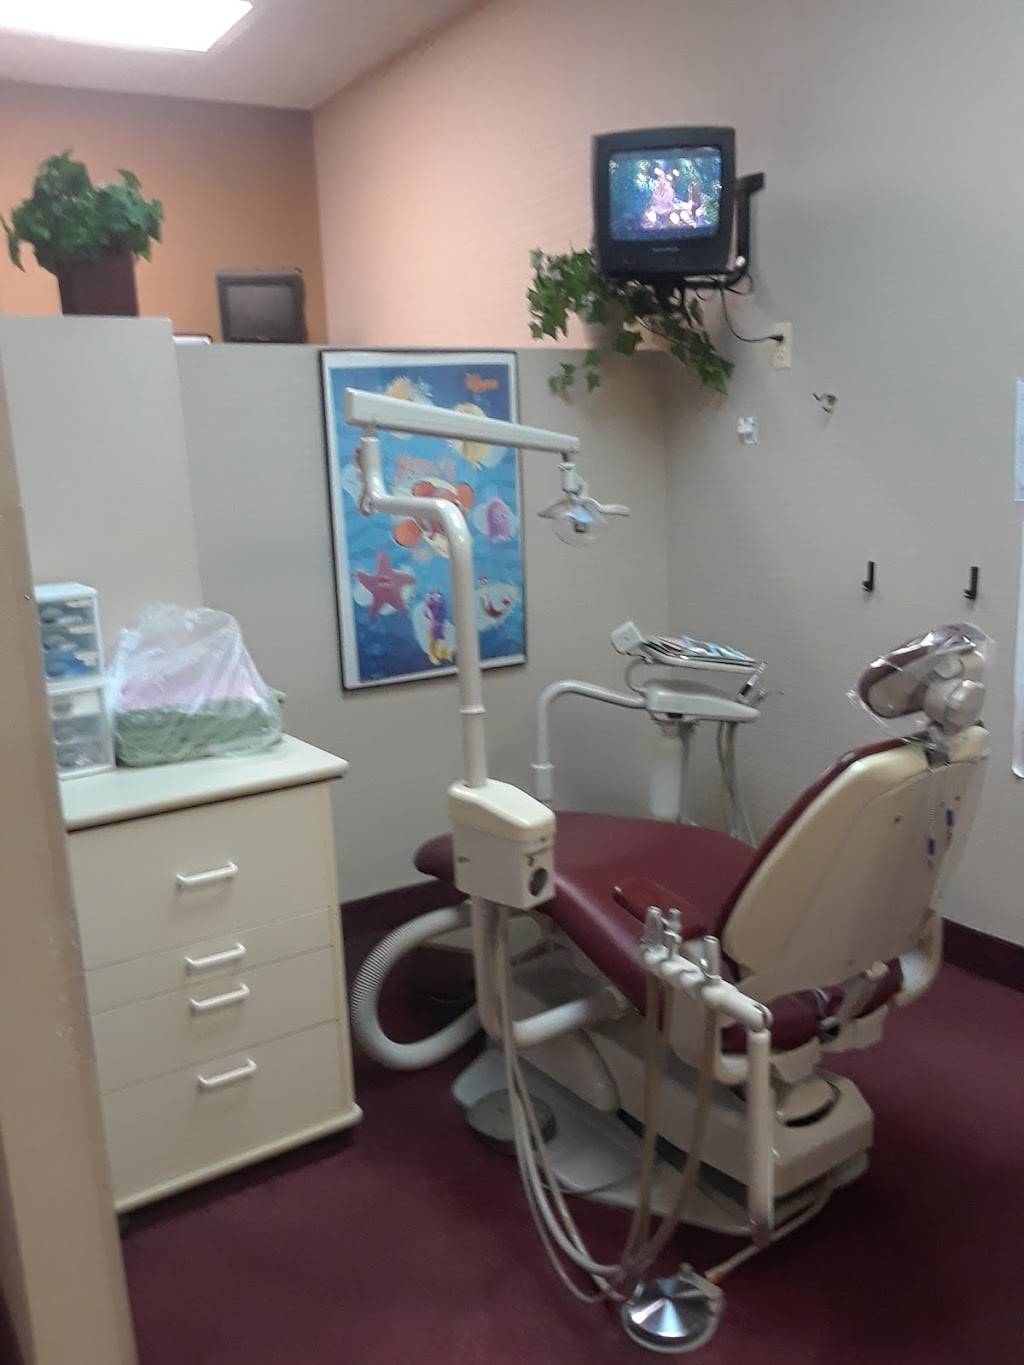 Eastland Dental Center | 18000 Vernier Rd, Harper Woods, MI 48225, USA | Phone: (313) 521-2070